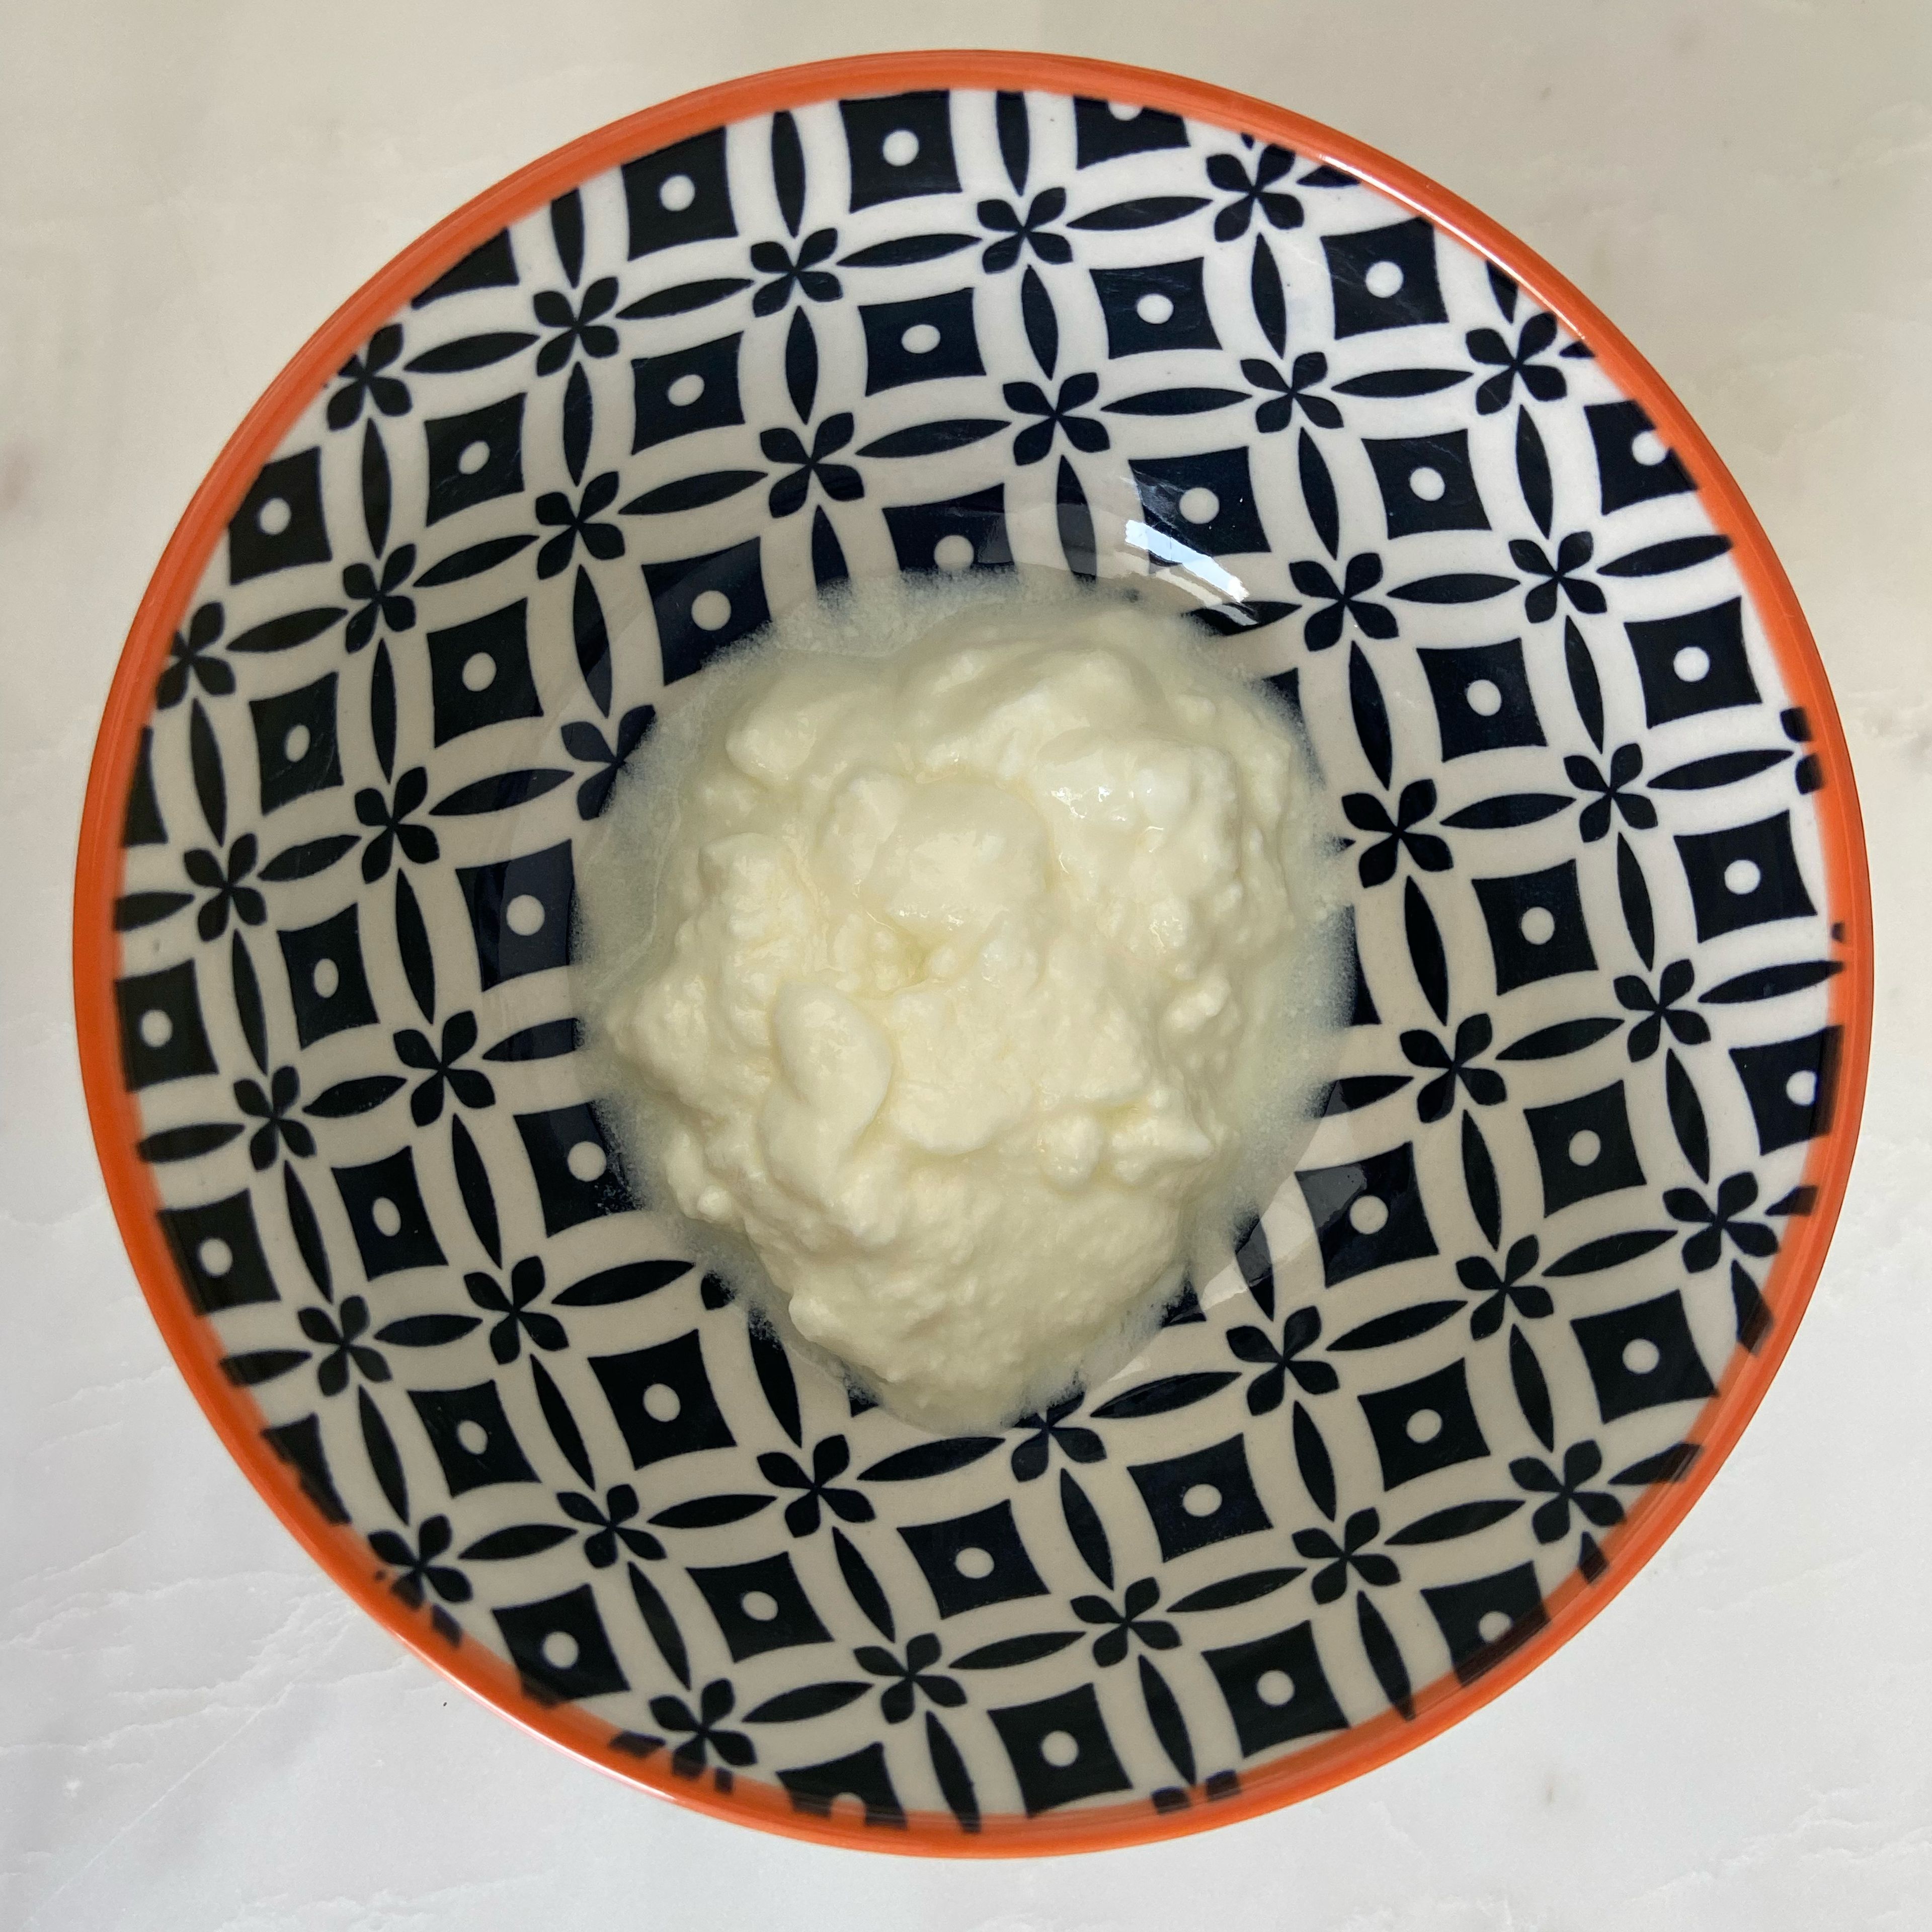 In a mixing bowl, put yogurt